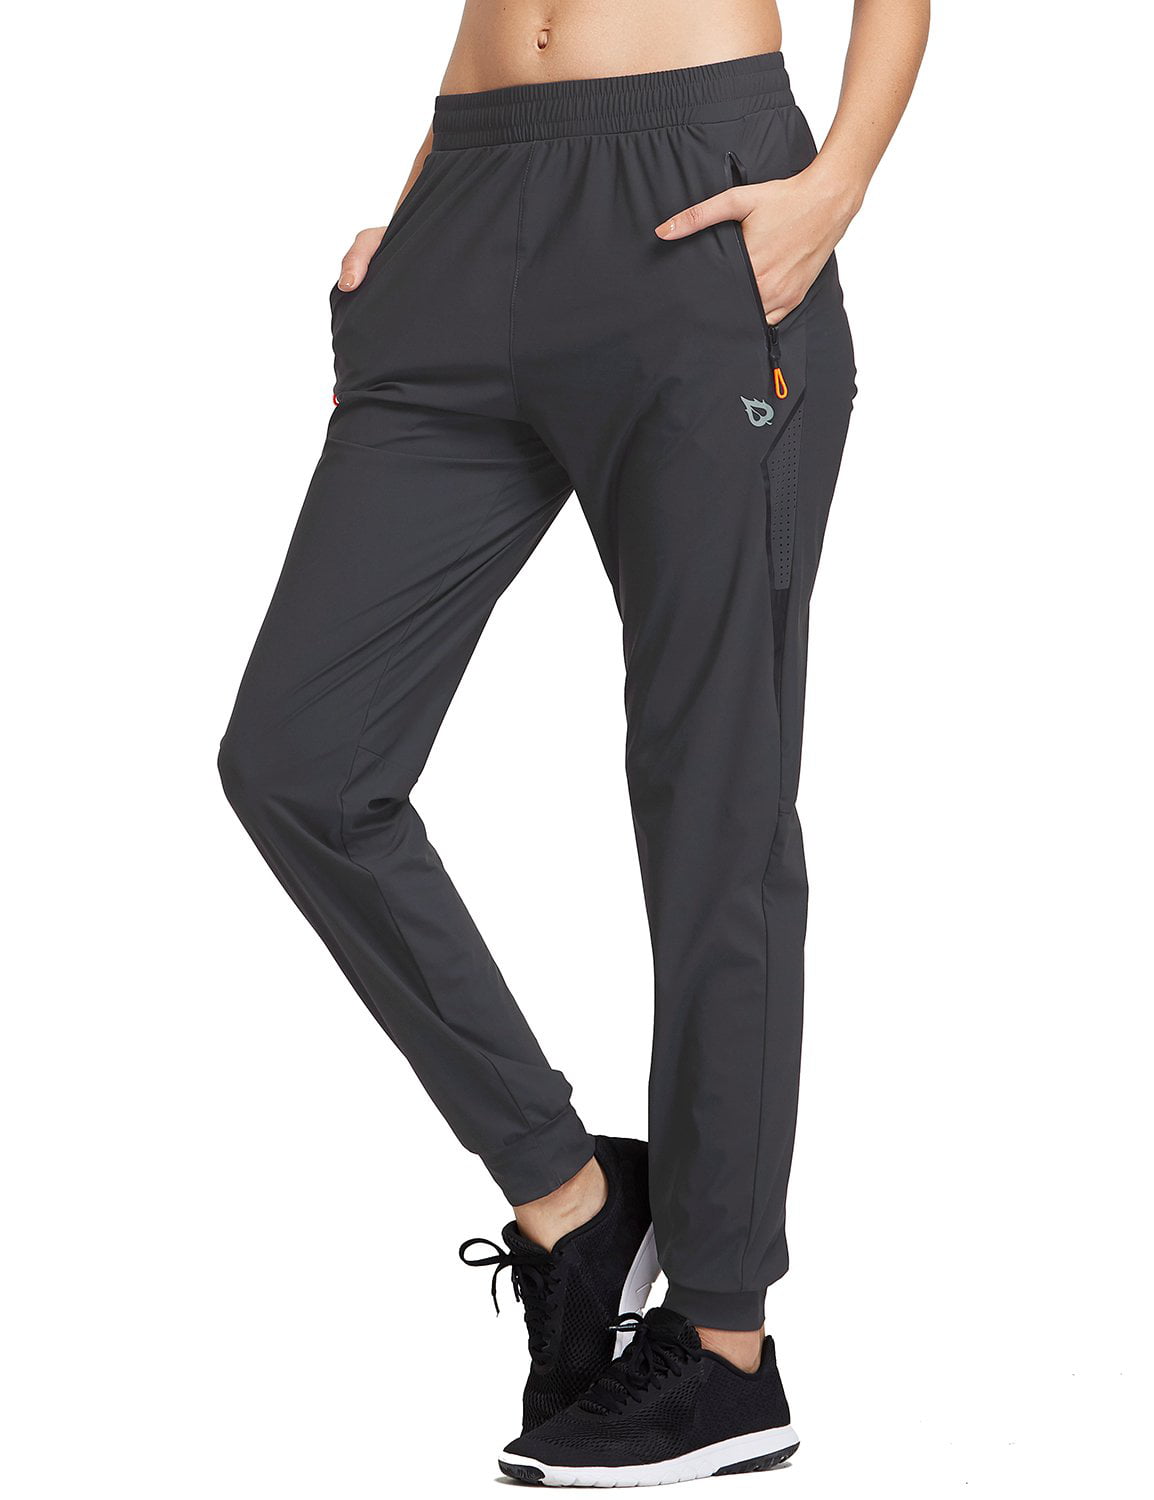 BALEAF Women's Fleece Lined Sweatpants for Cold Winter Thermal Hiking Pants Stretch Elastic Waist Zipper Pocket 